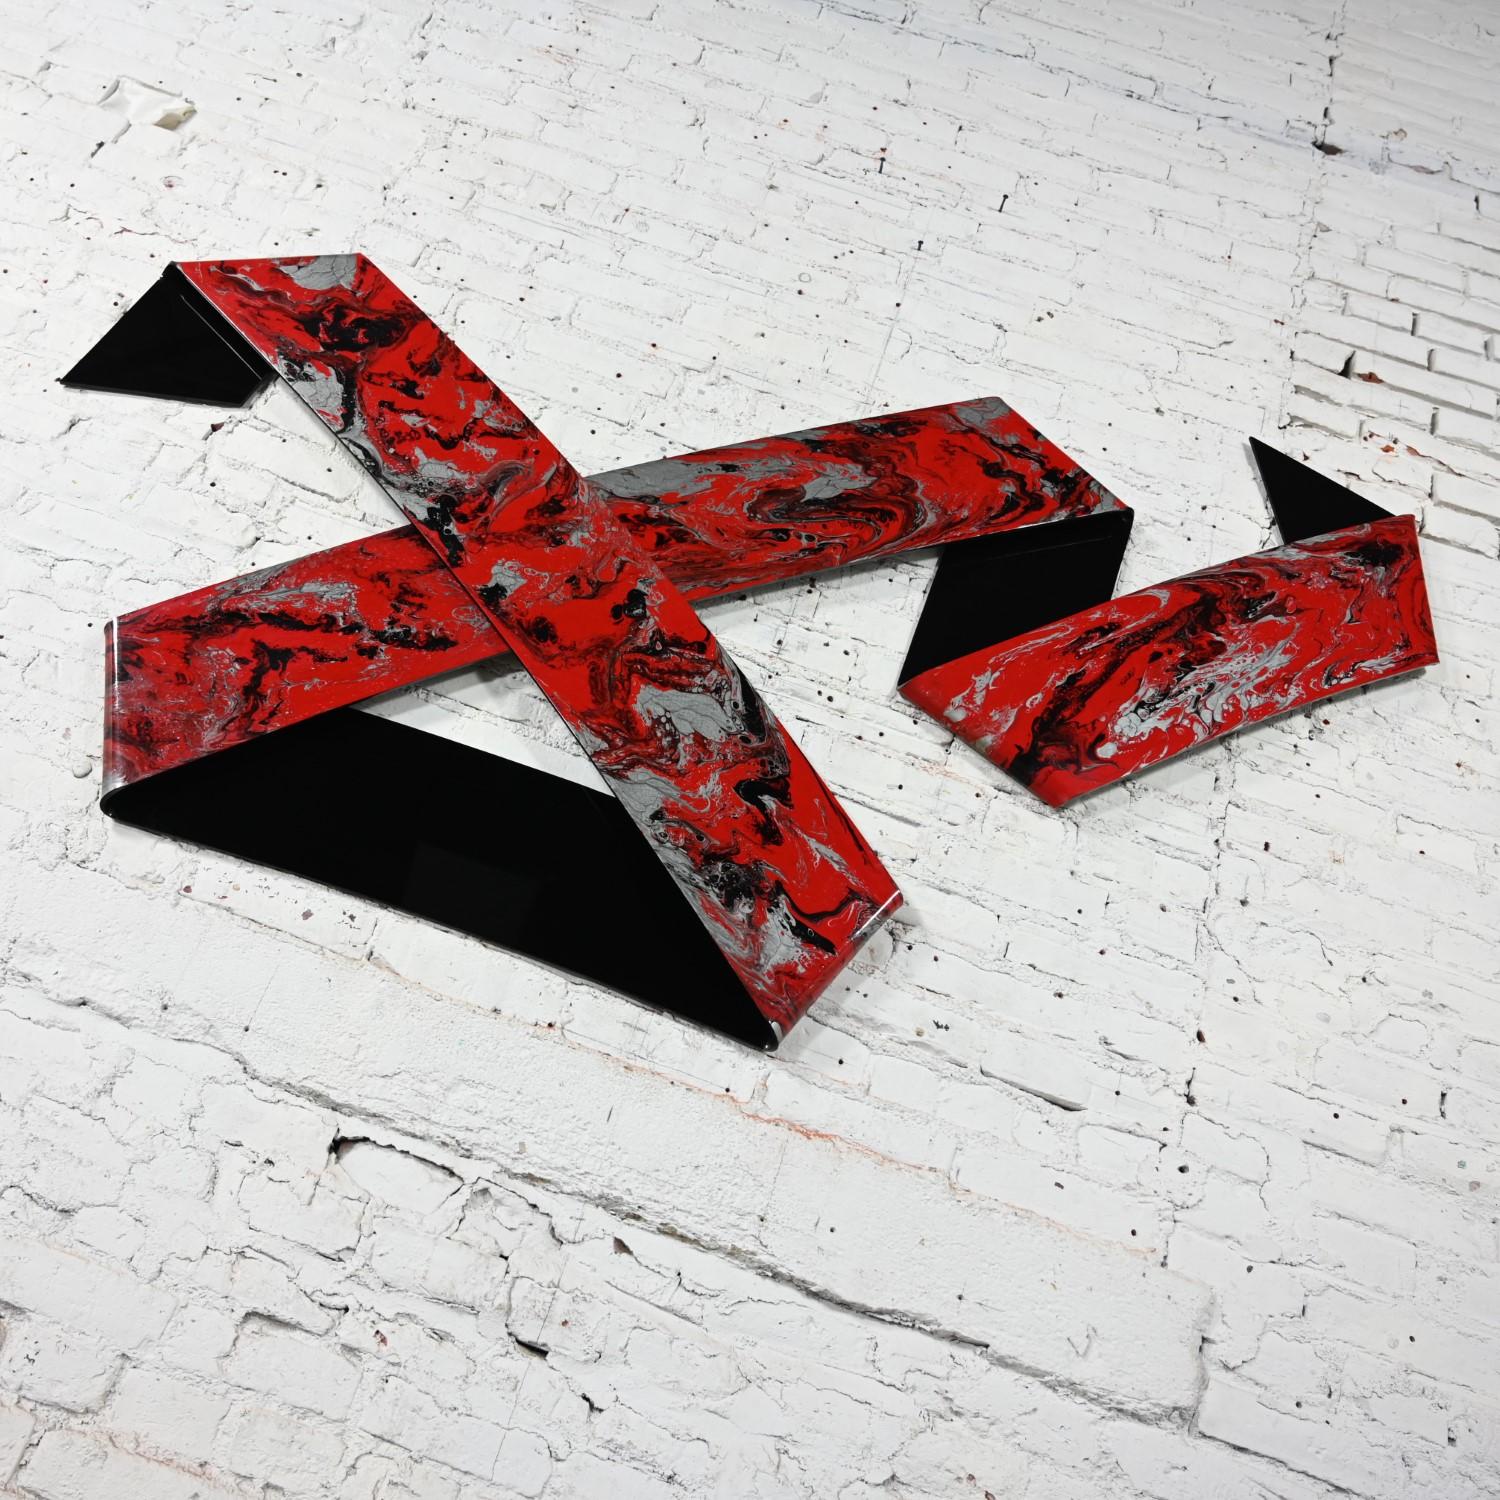 1990 Abstract Richard Mann Folded Plexiglass Ribbon Wall Sculpture Red Black  For Sale 1